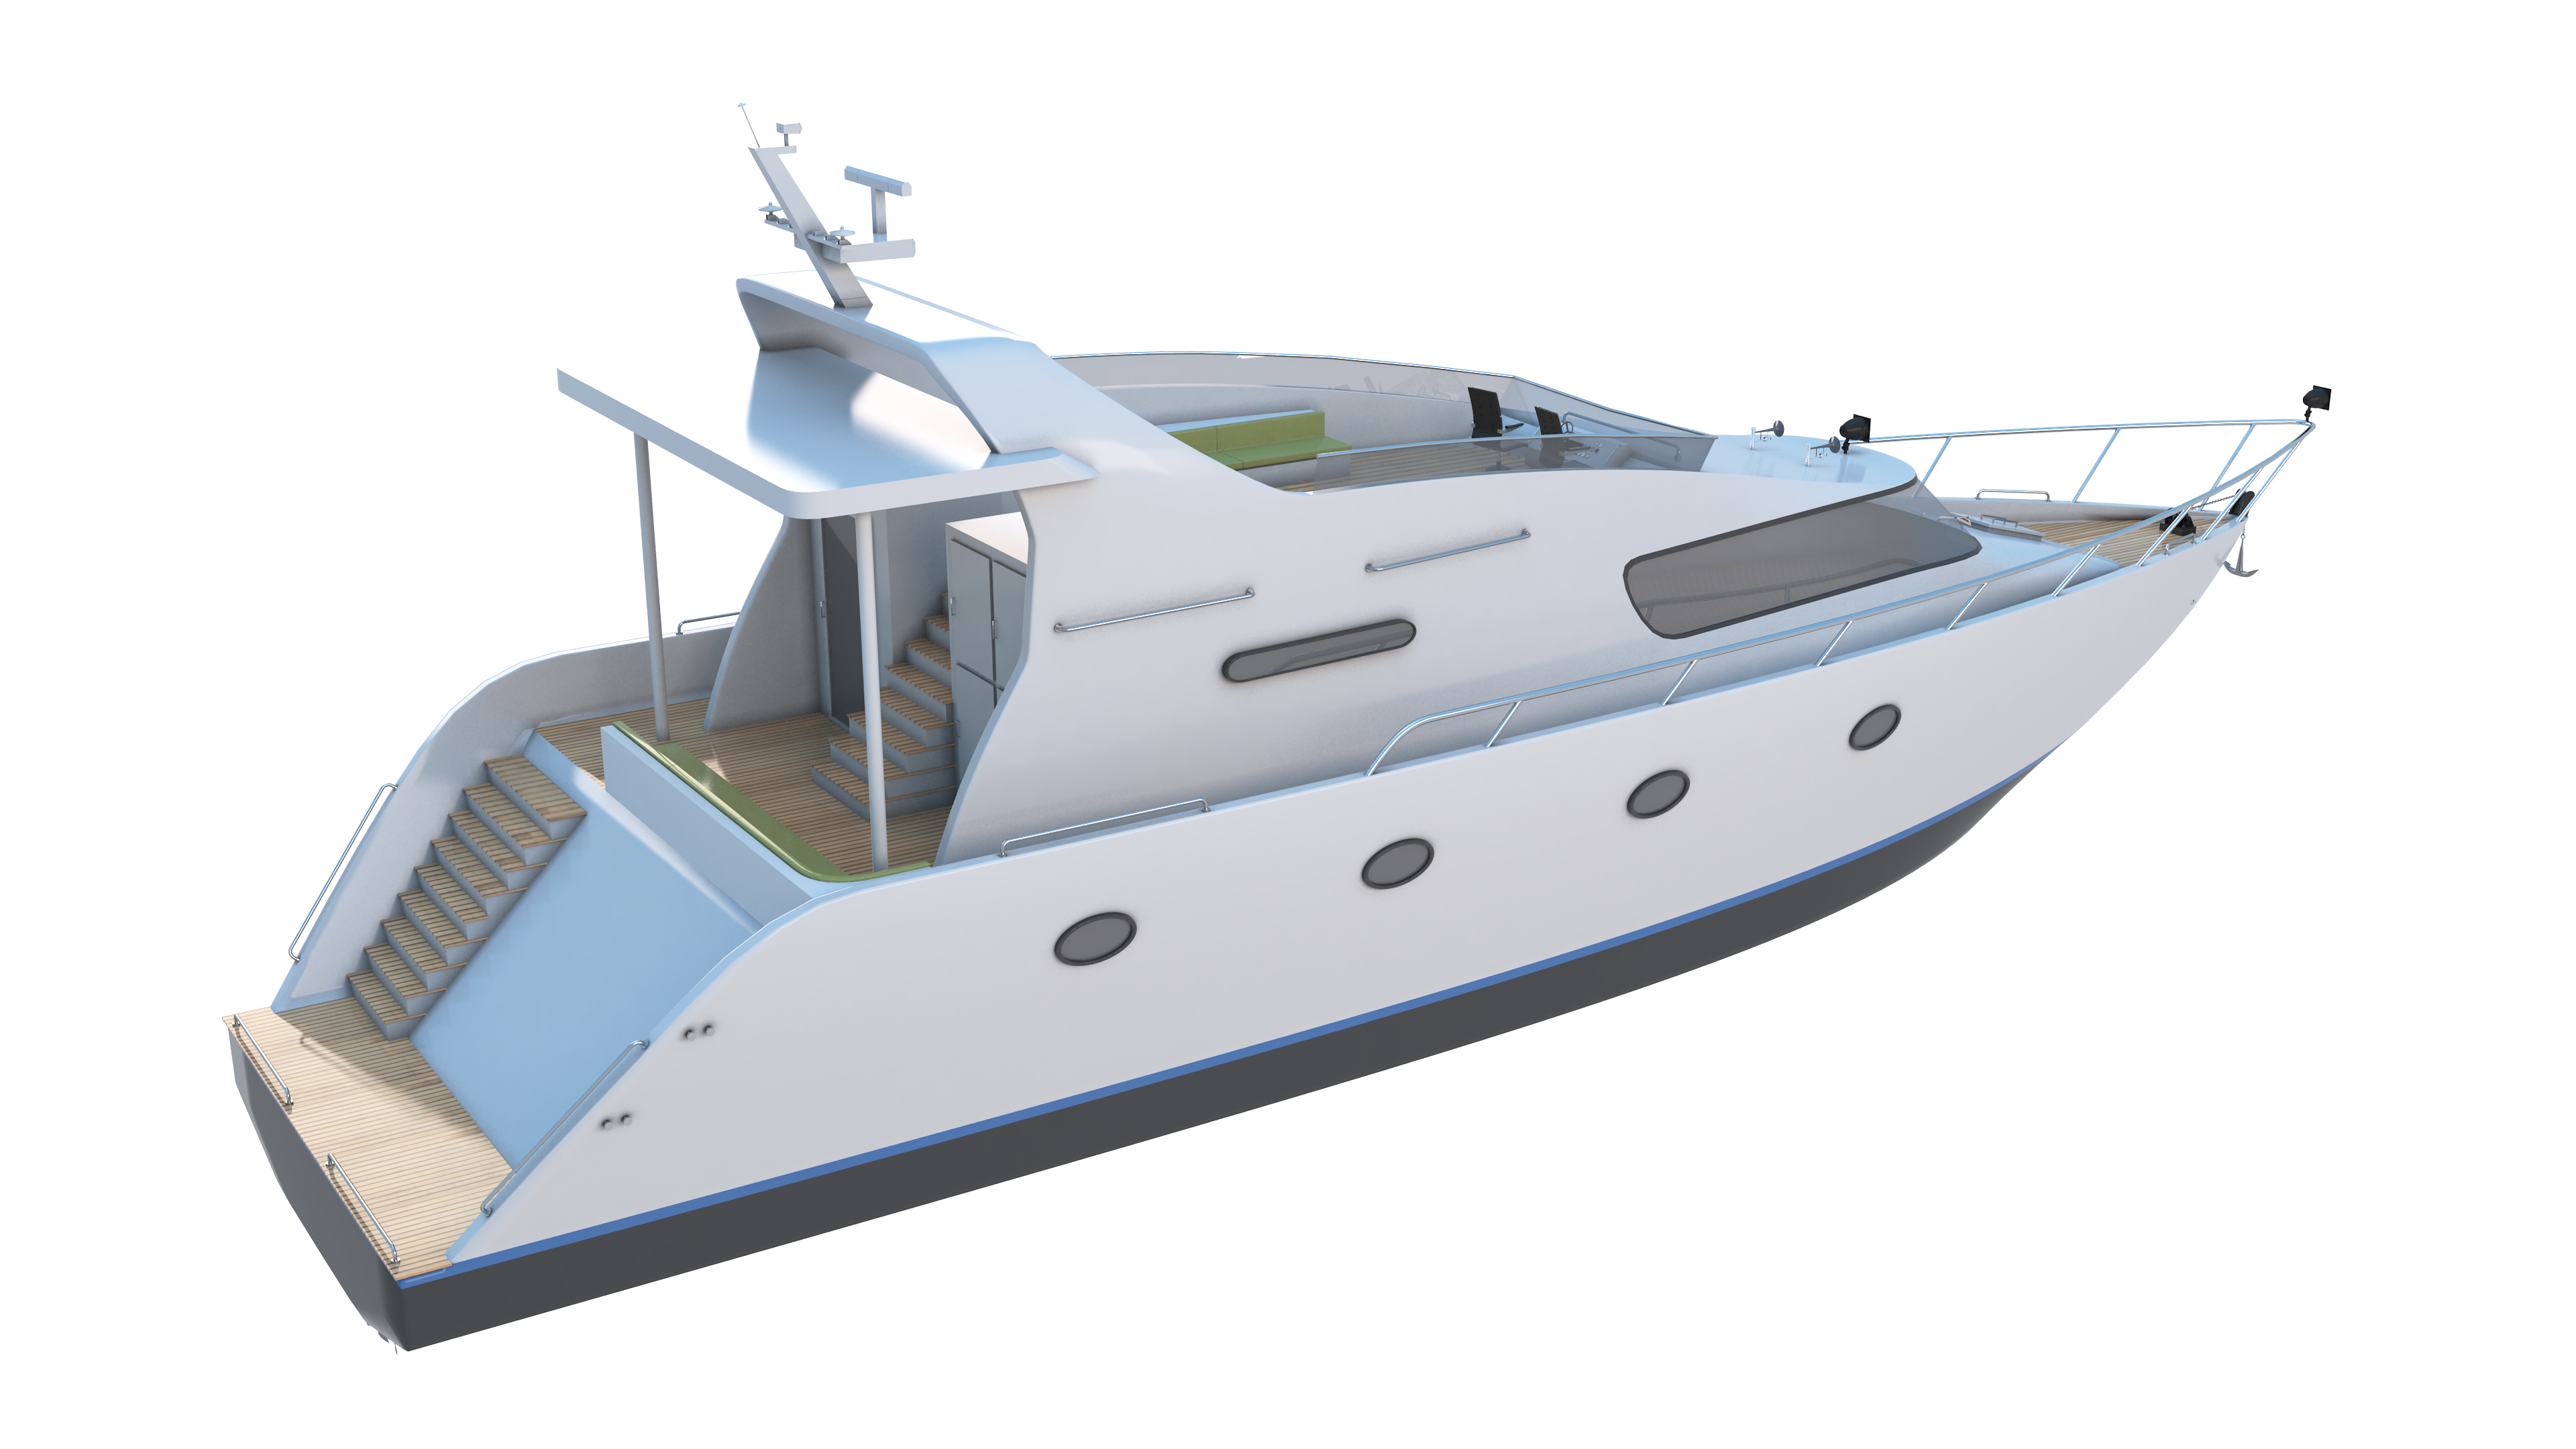 motor yacht 3d